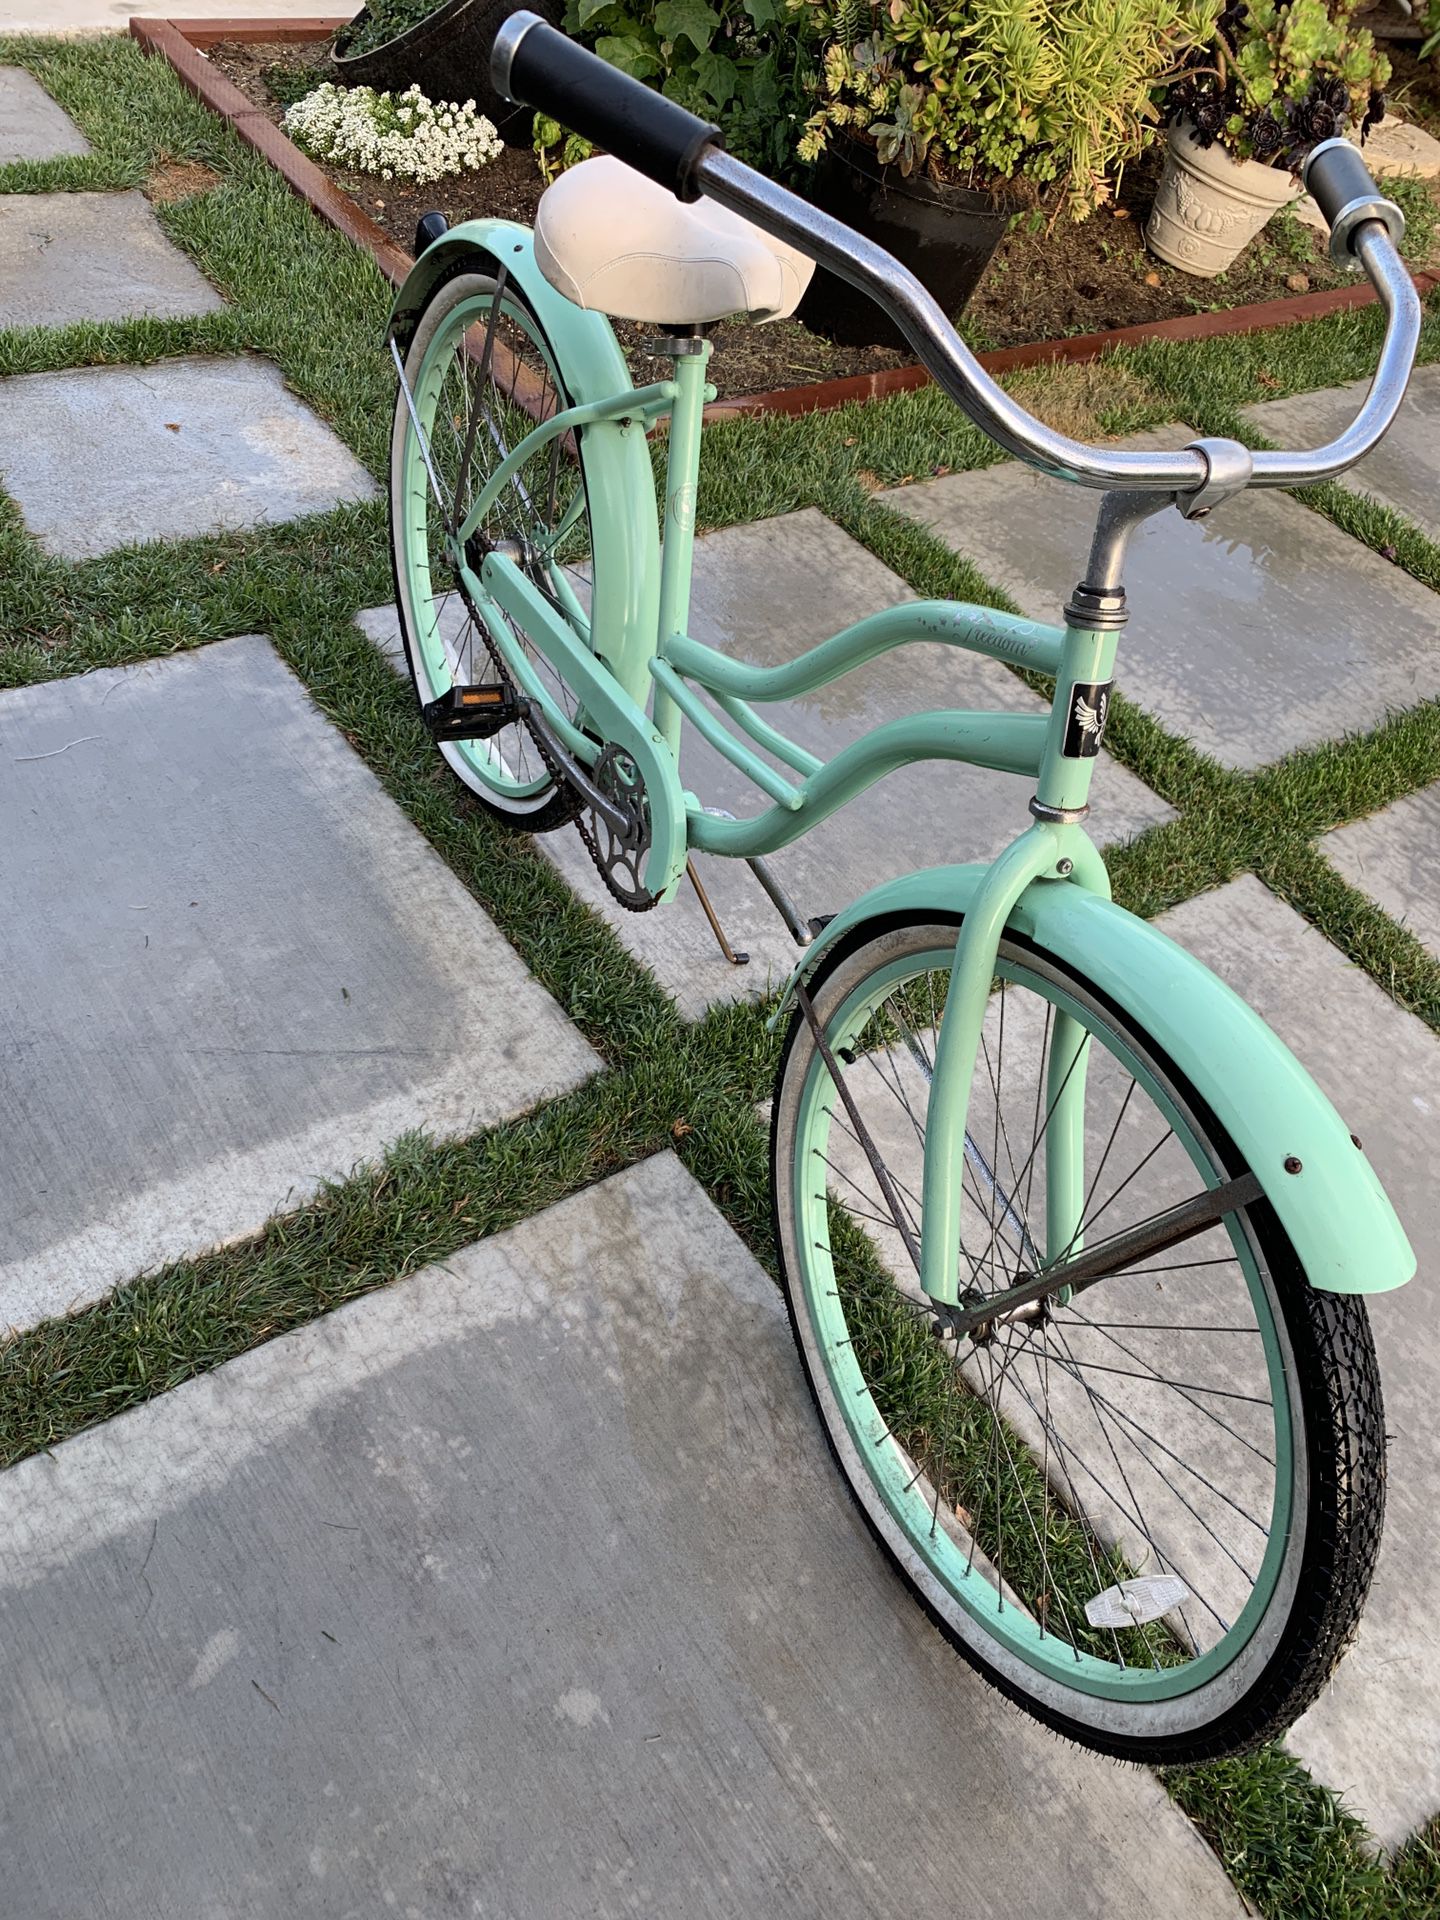 Mint green beach cruiser bike